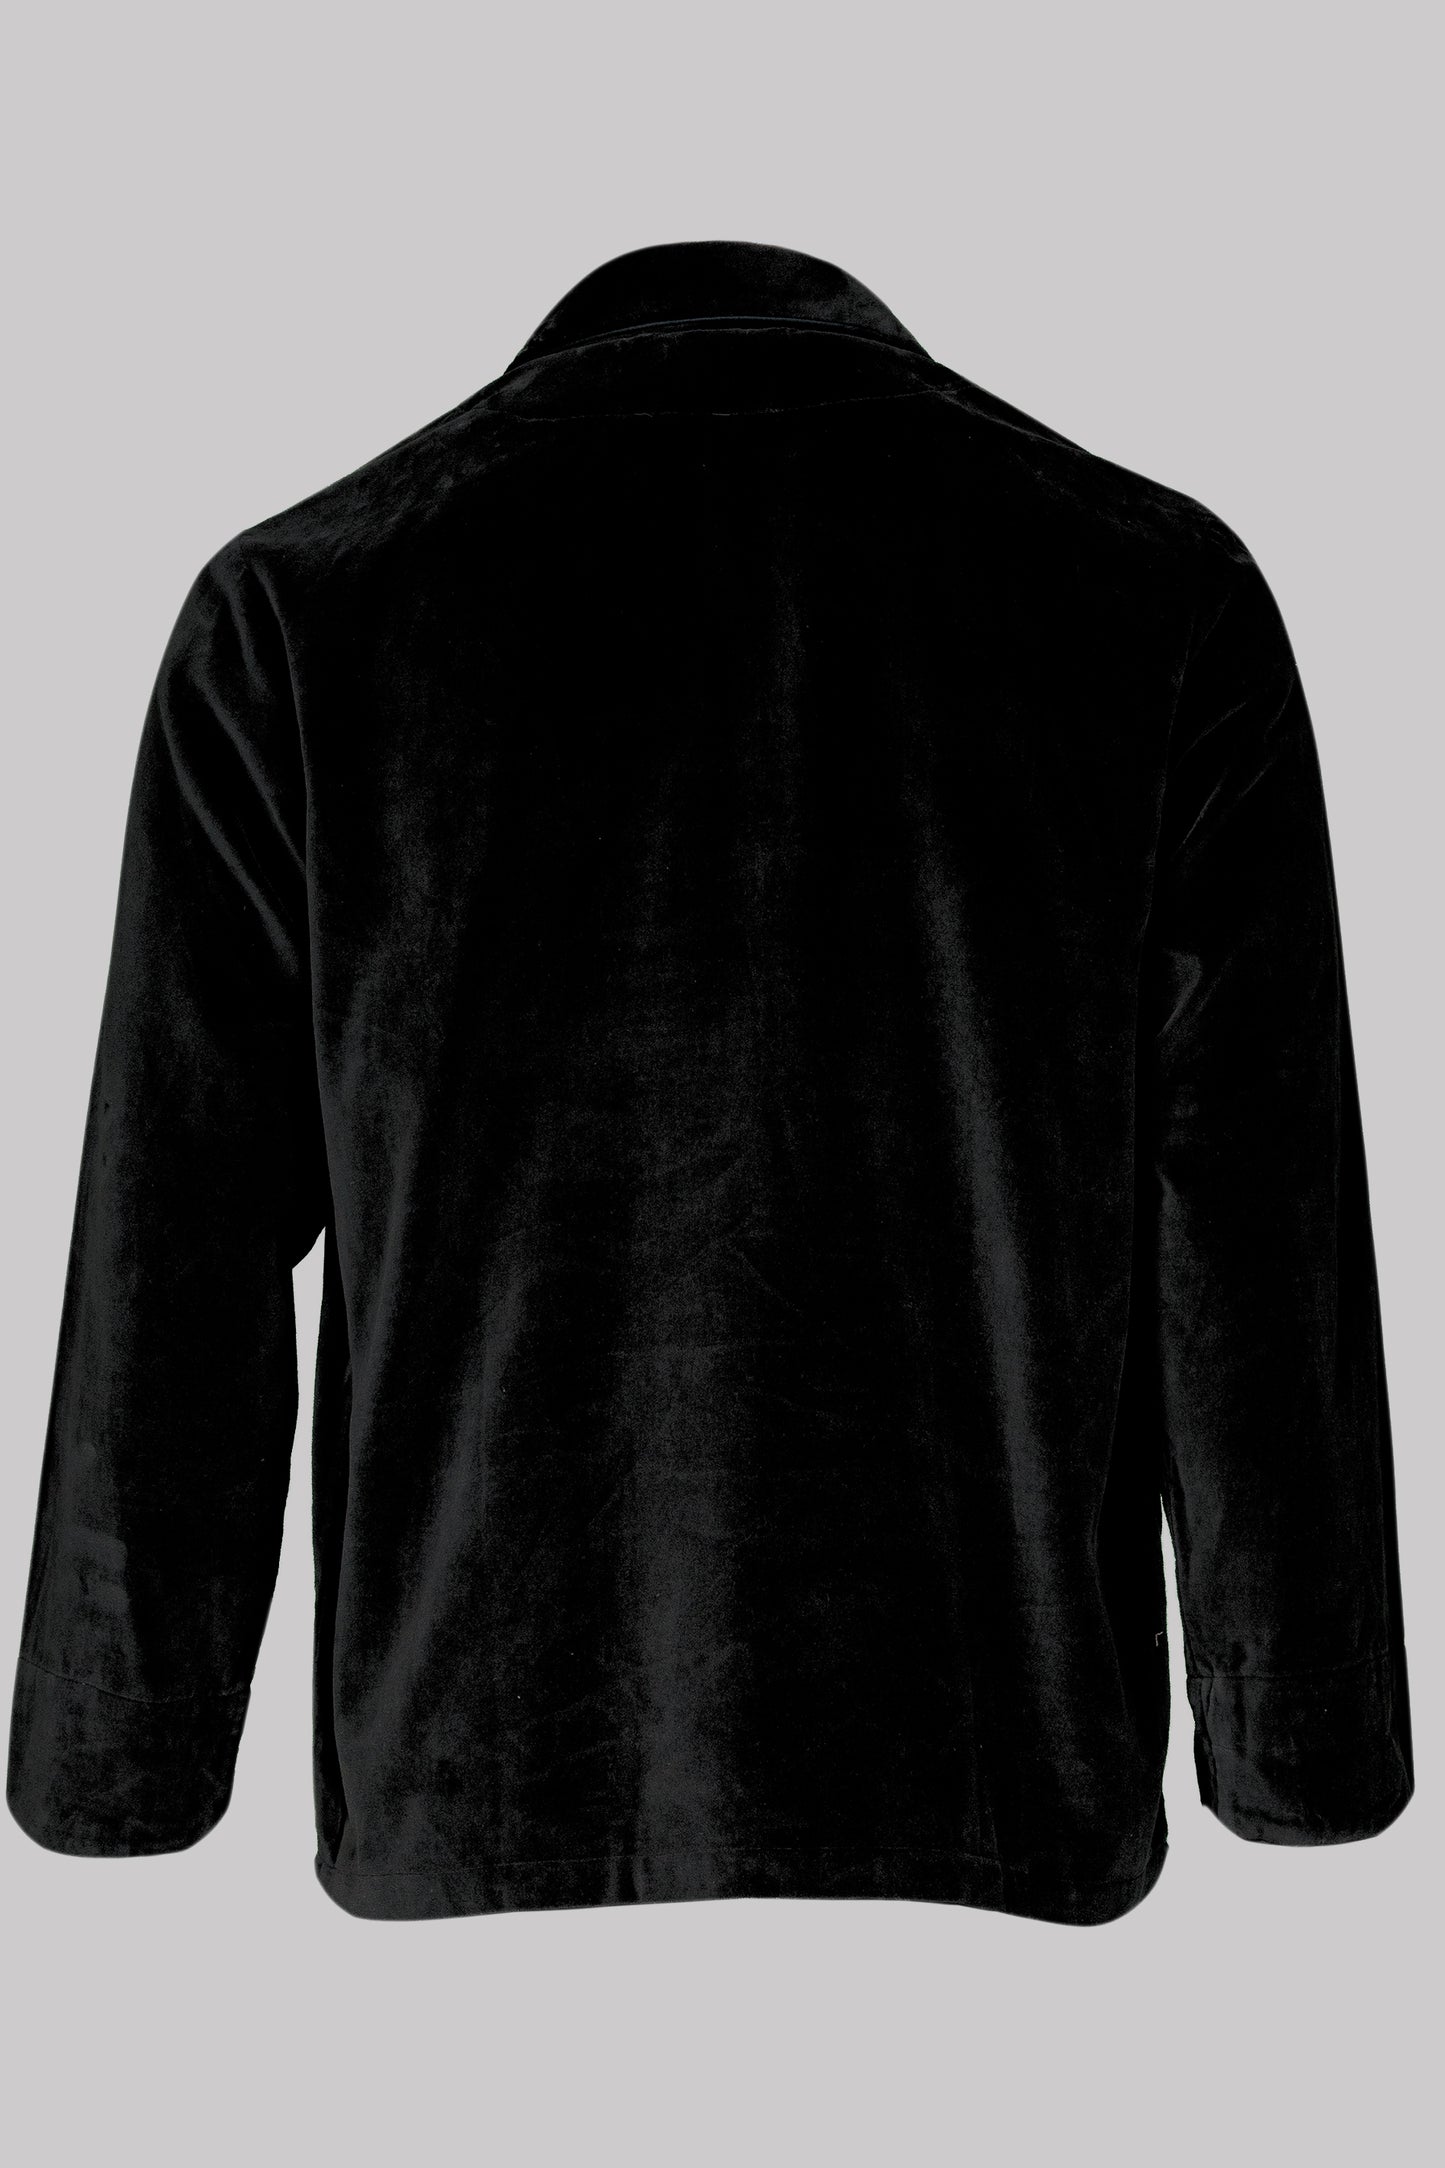 HUSSAR-SHIRT BLACK with black braiding 100% COTTON Velvet fabric-dyed